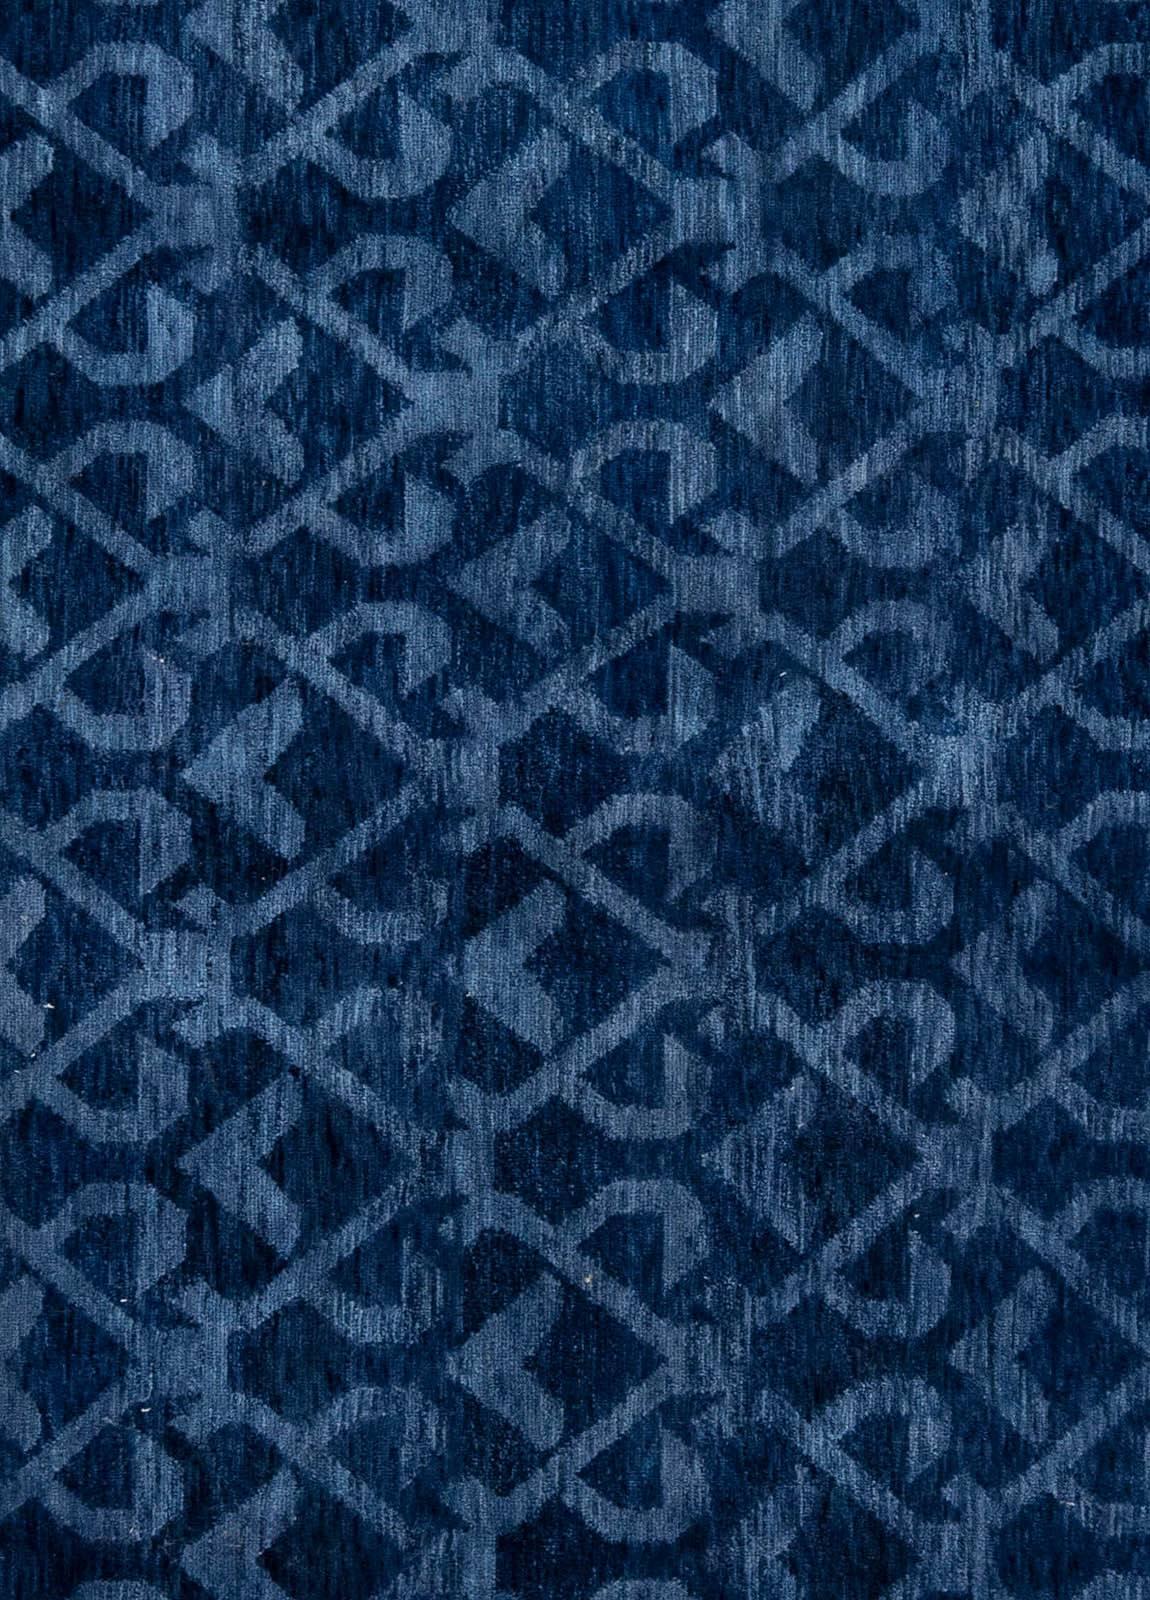 Contemporary geometric handcrafted pashmina Euro rug by Doris Leslie Blau.
Size: 12'8